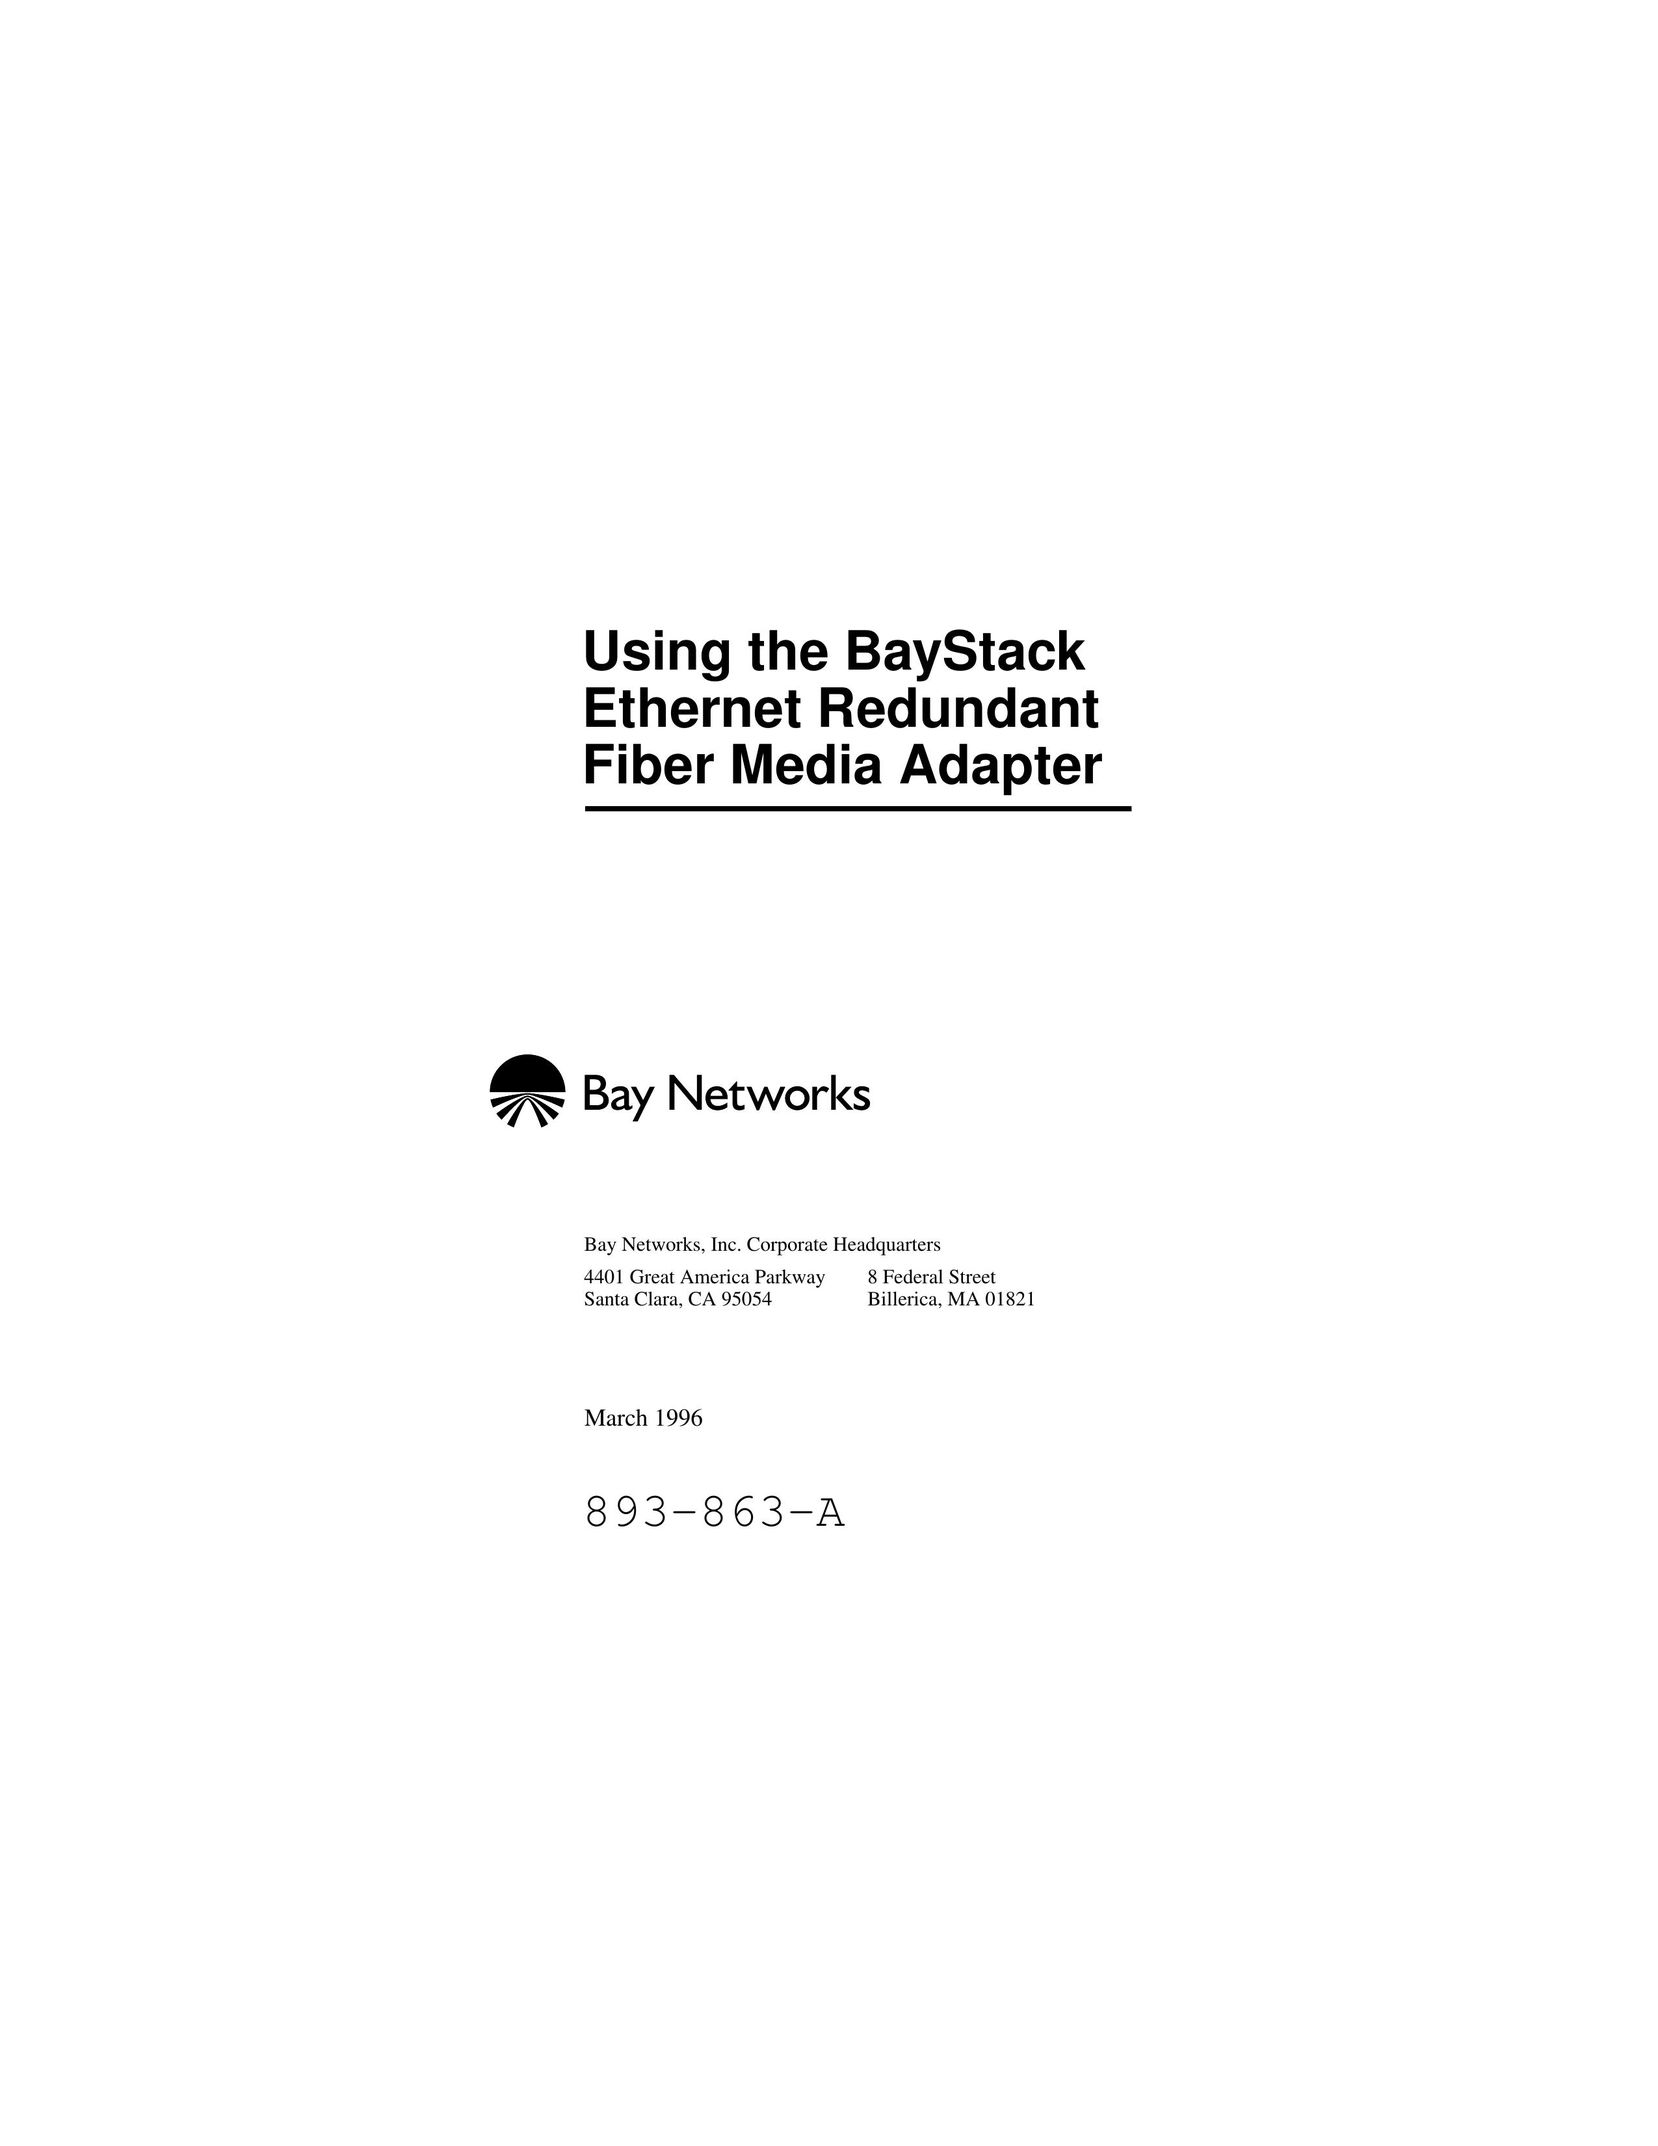 Bay Technical Associates Fiber Media Adapter Network Card User Manual